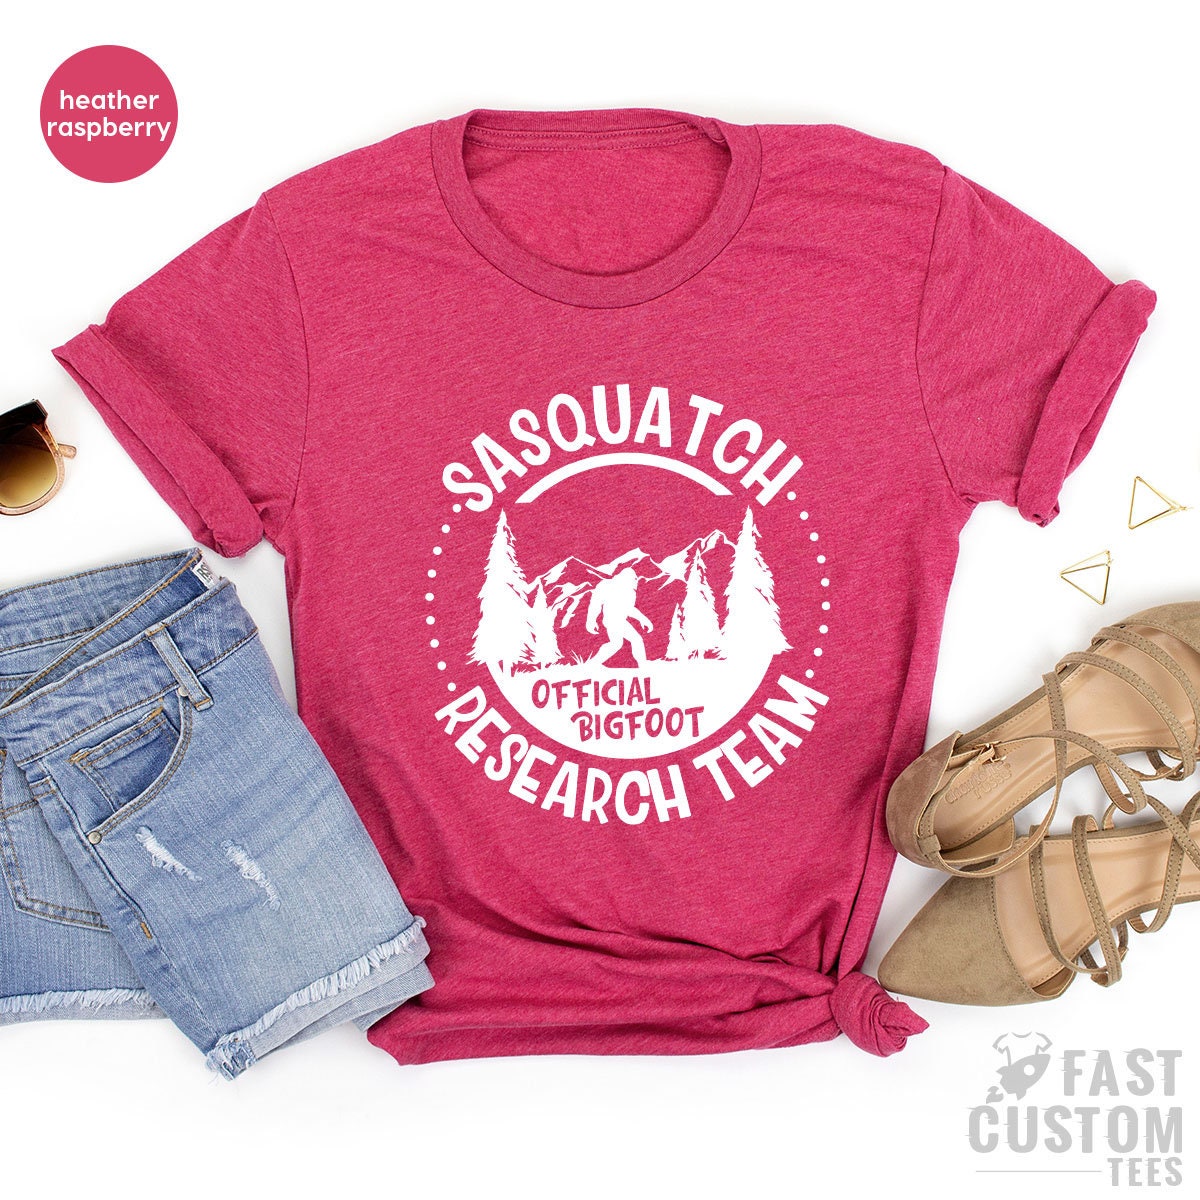 Funny Bigfoot Hunter Shirt, Outdoor Hunting Shirt, Sasquatch Research Team Official Bigfoot Shirt, Finding Bigfoot Shirt, Scary Monster Tee - Fastdeliverytees.com